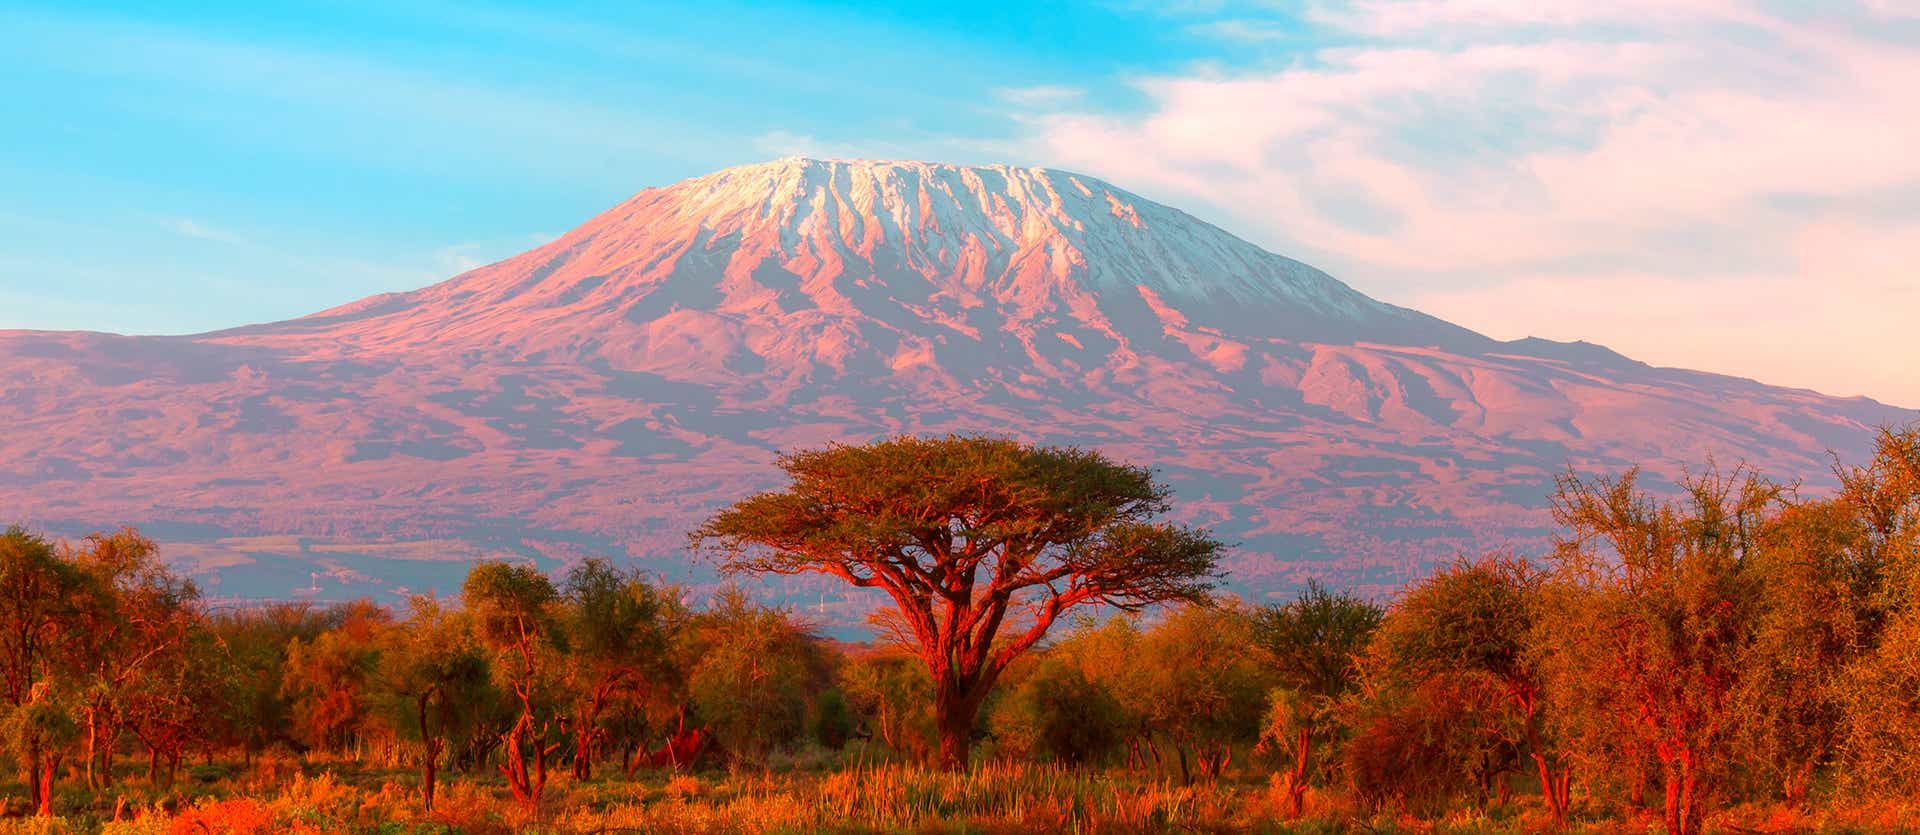 Monte Kilimanjaro <span class="iconos separador"></span> Parque Nacional Amboseli